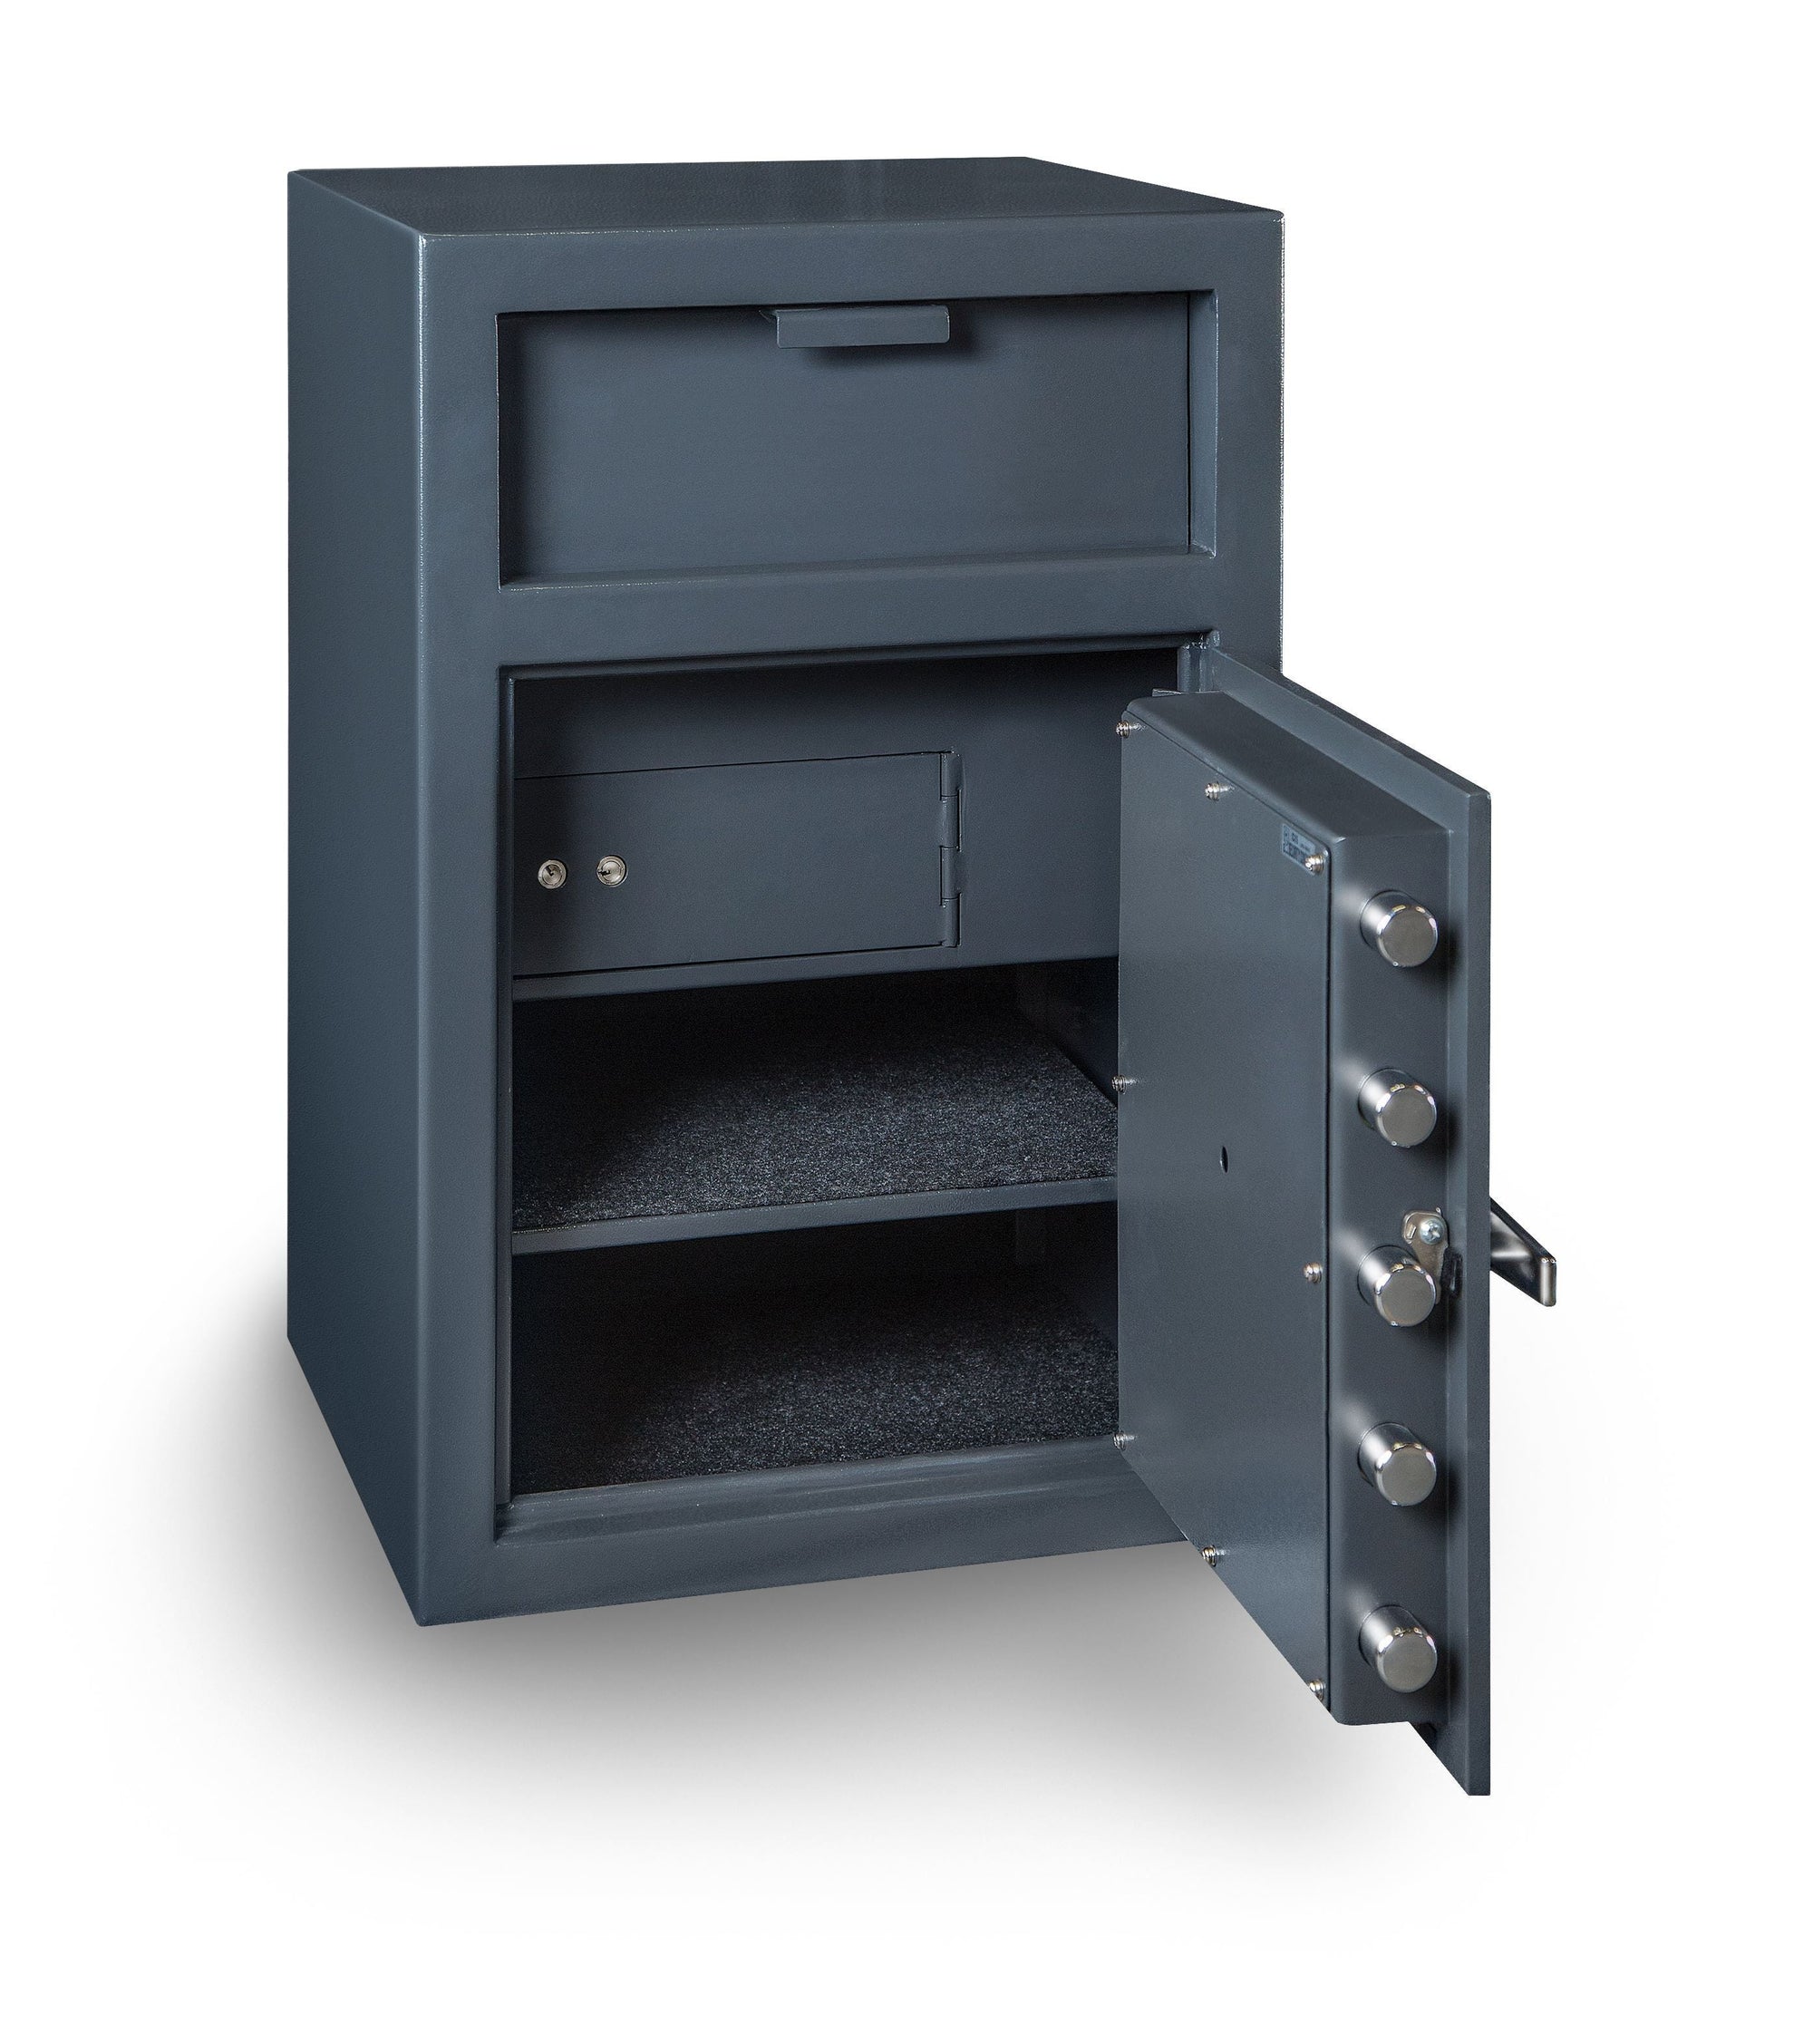 Hollon FD-3020EILK Depository Safe w/ Inner Locking Compartment